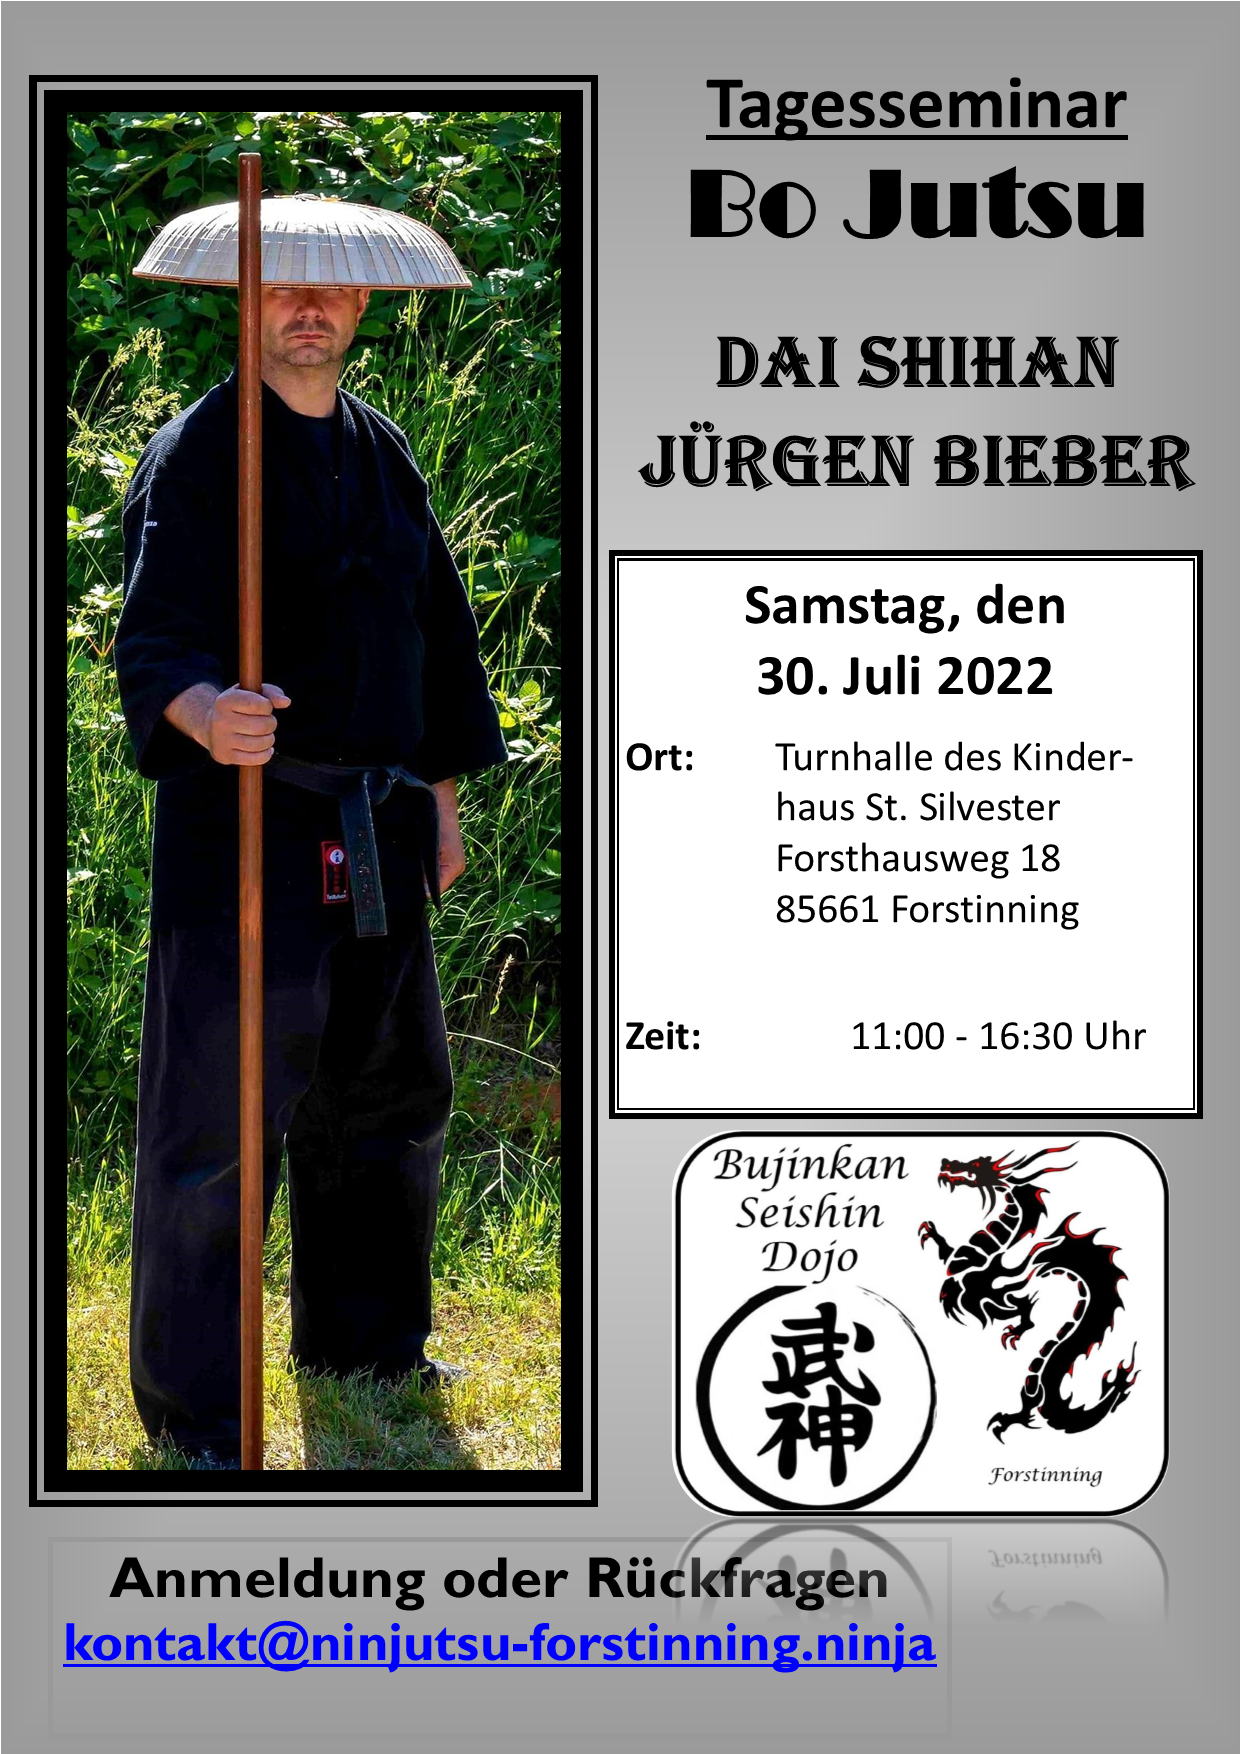 Tagesseminar "Bo Jutsu" mit Dai Shihan Jürgen Bieber